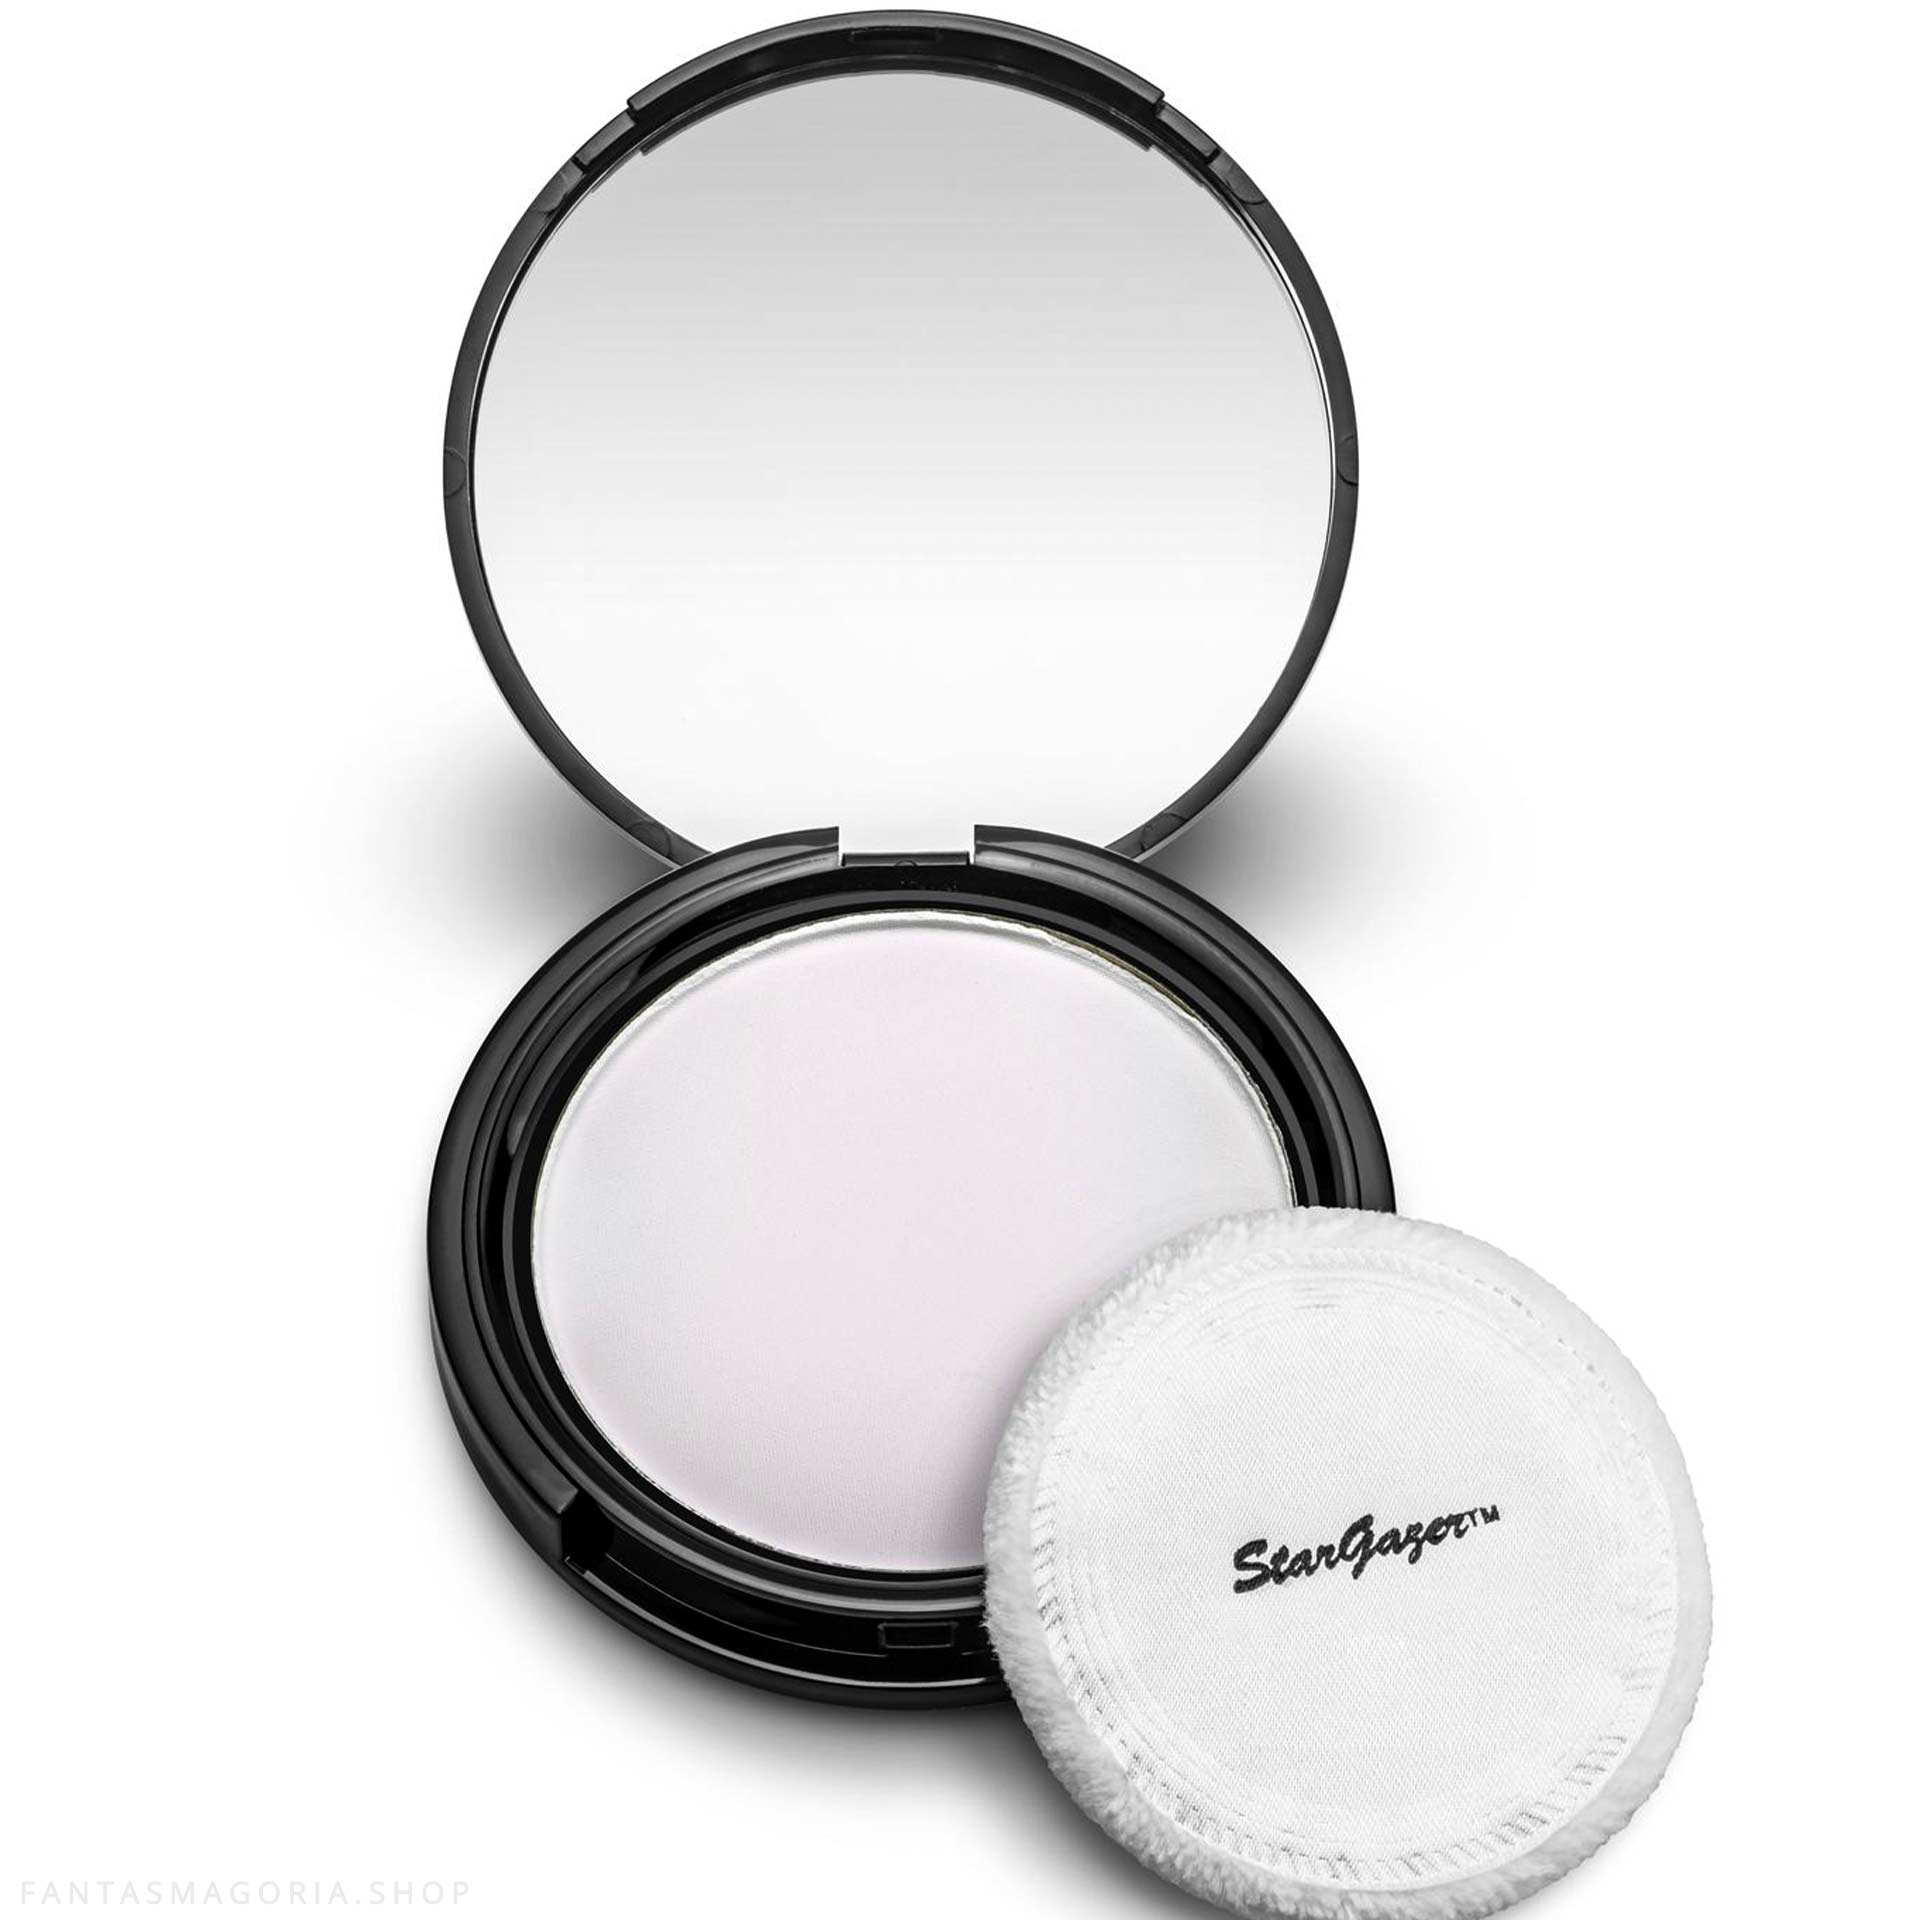 Starblend Powder Face Paint - Moonlight White - 56g